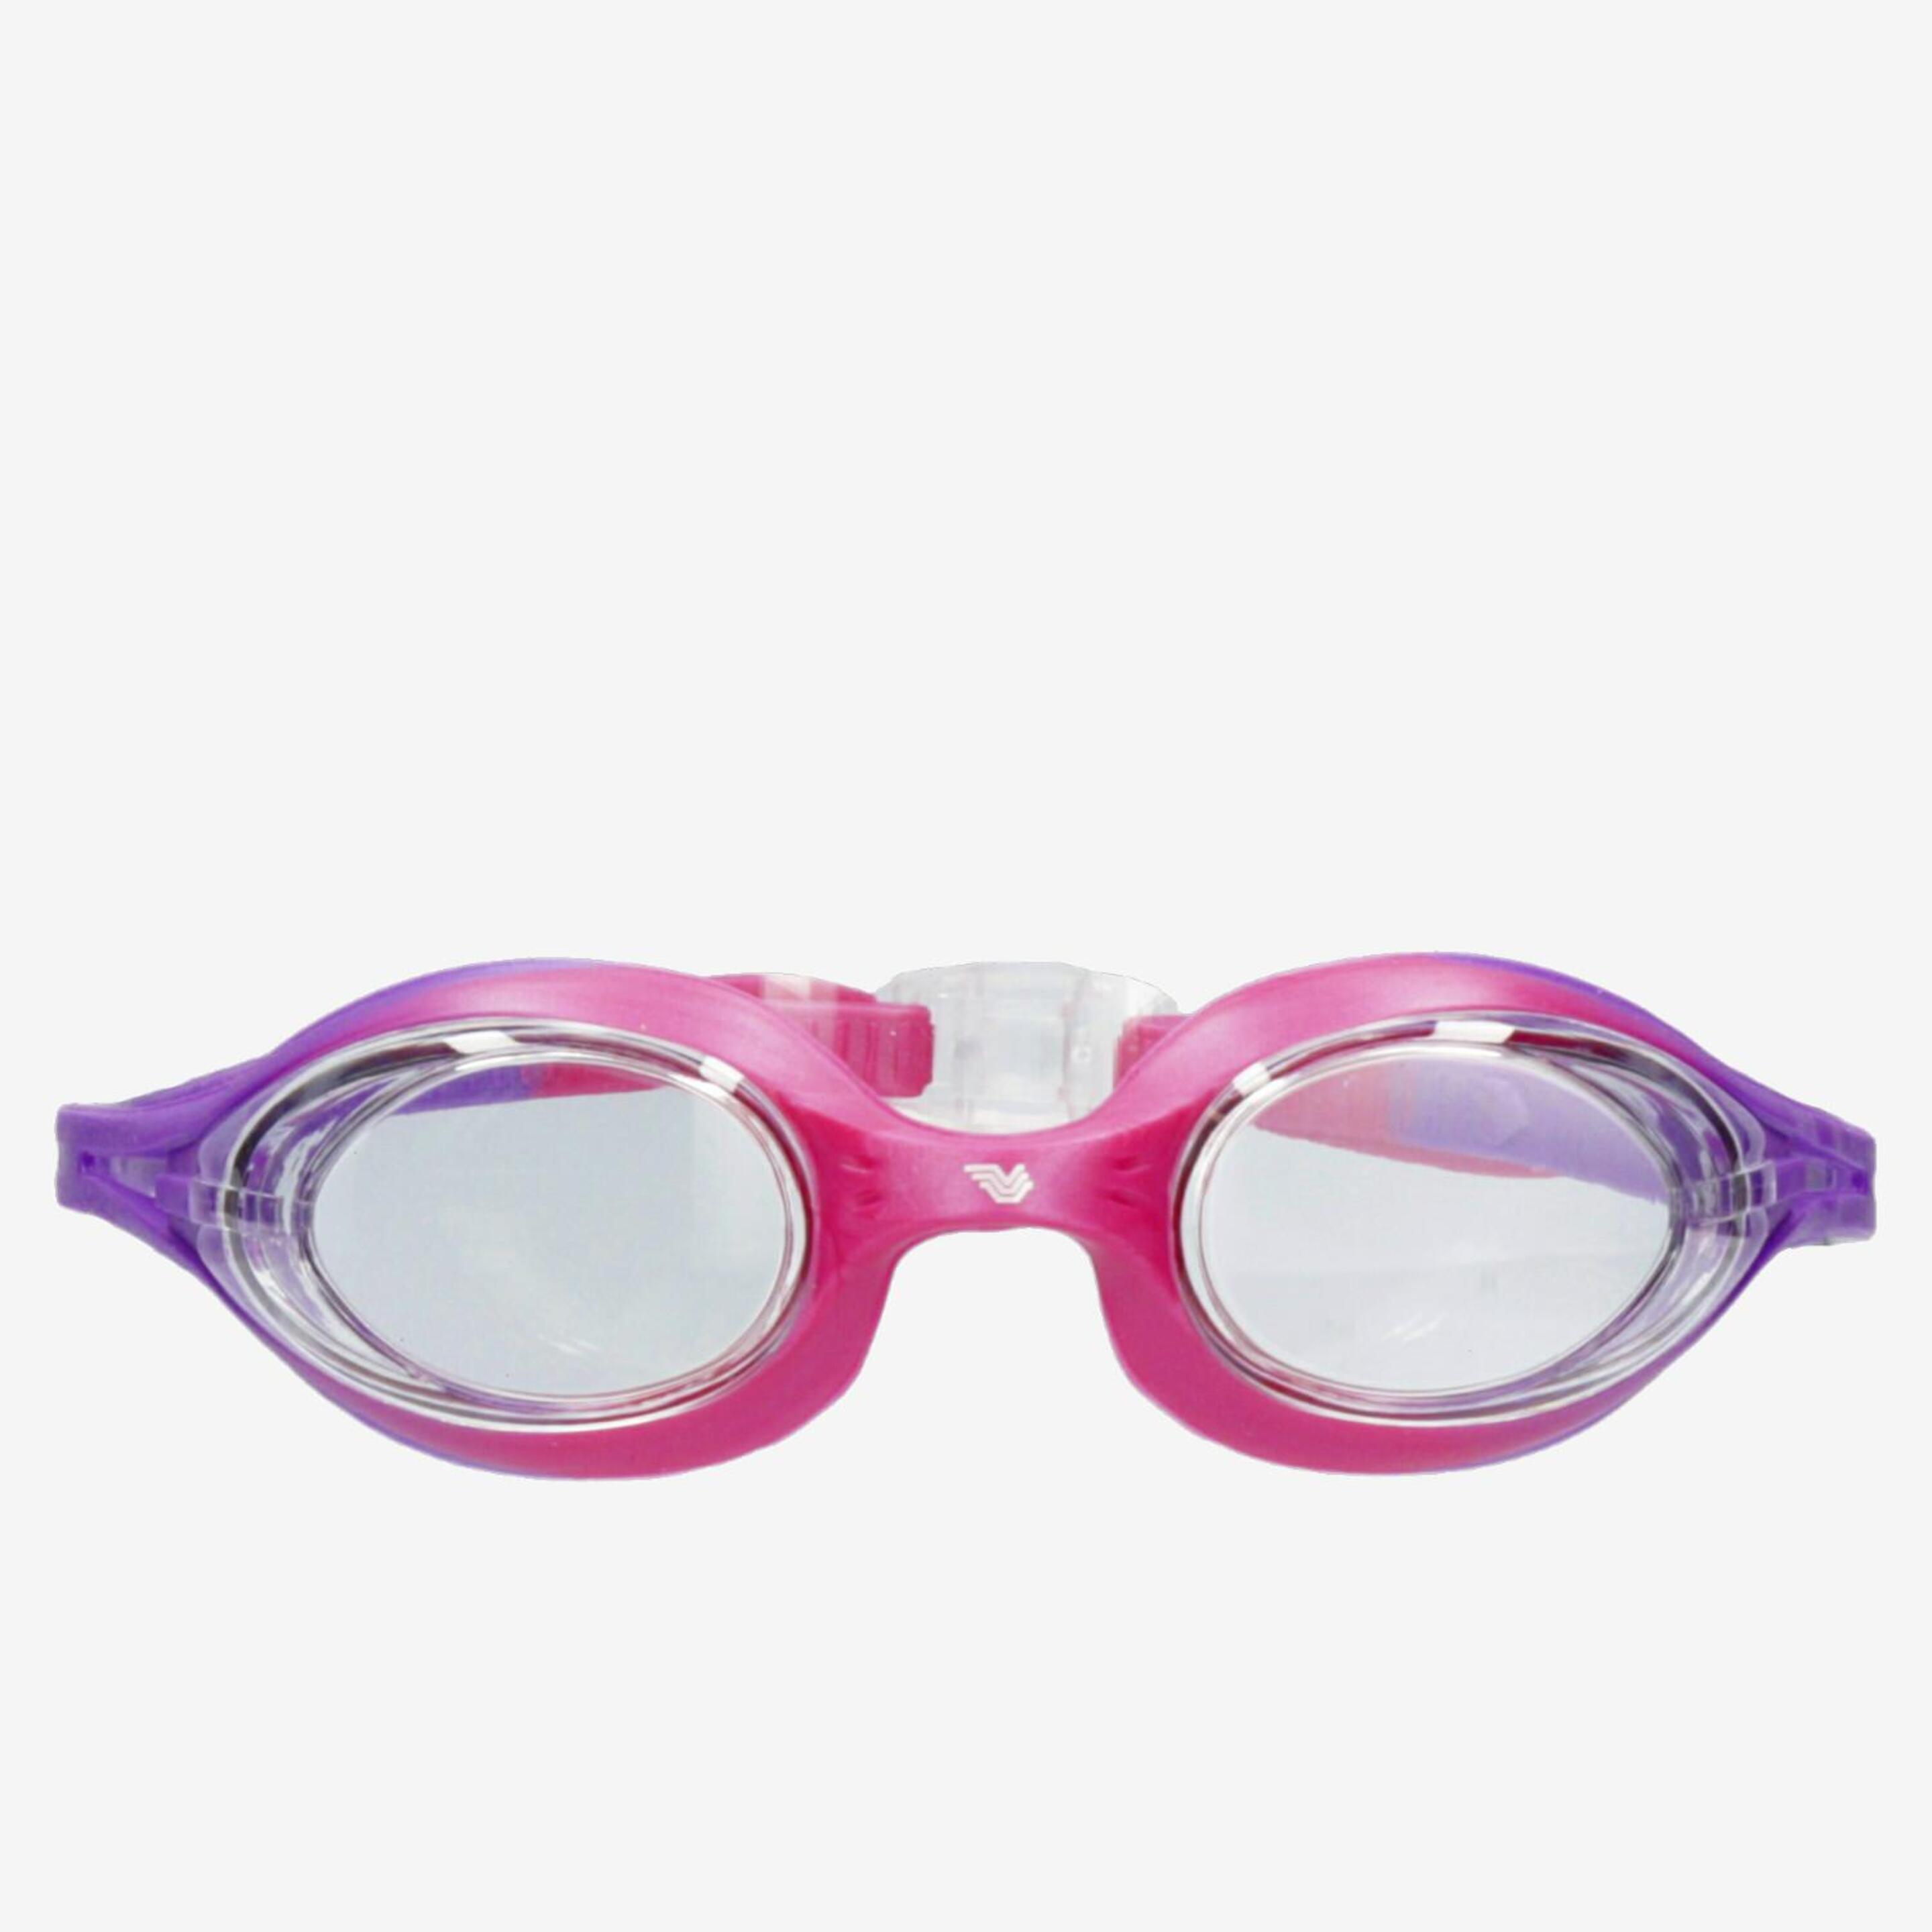 Gafas Natación Ankor Dolphin - rosa - Gafas Piscina Junior